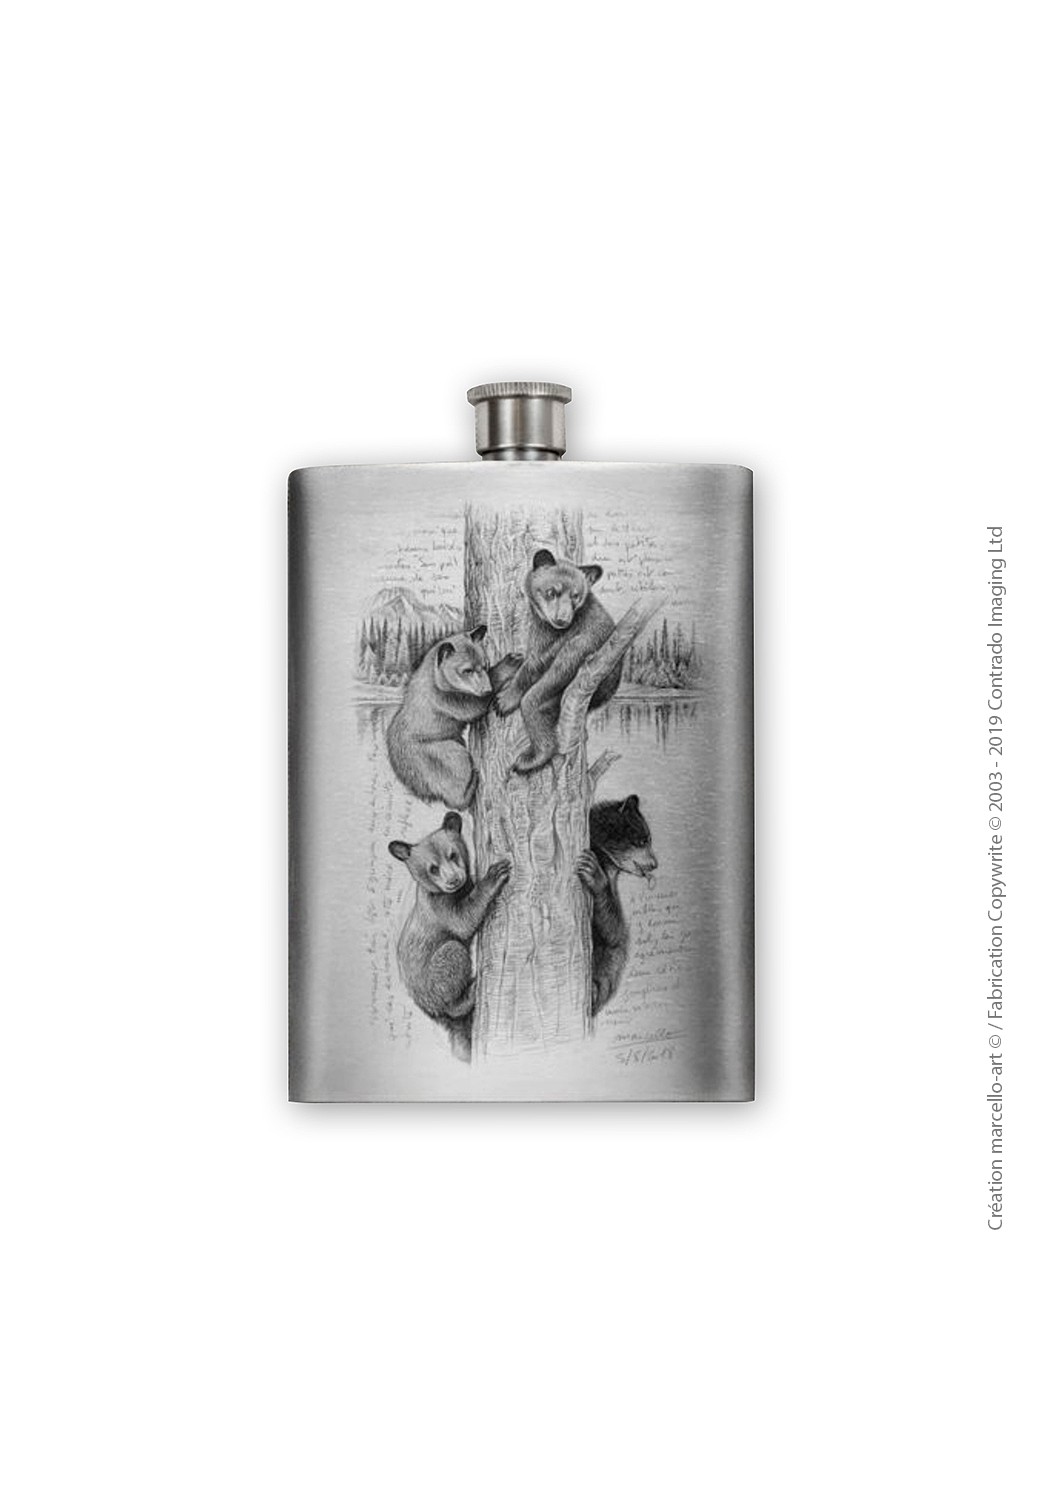 Marcello-art: Decoration accessoiries Flask 382 little bears